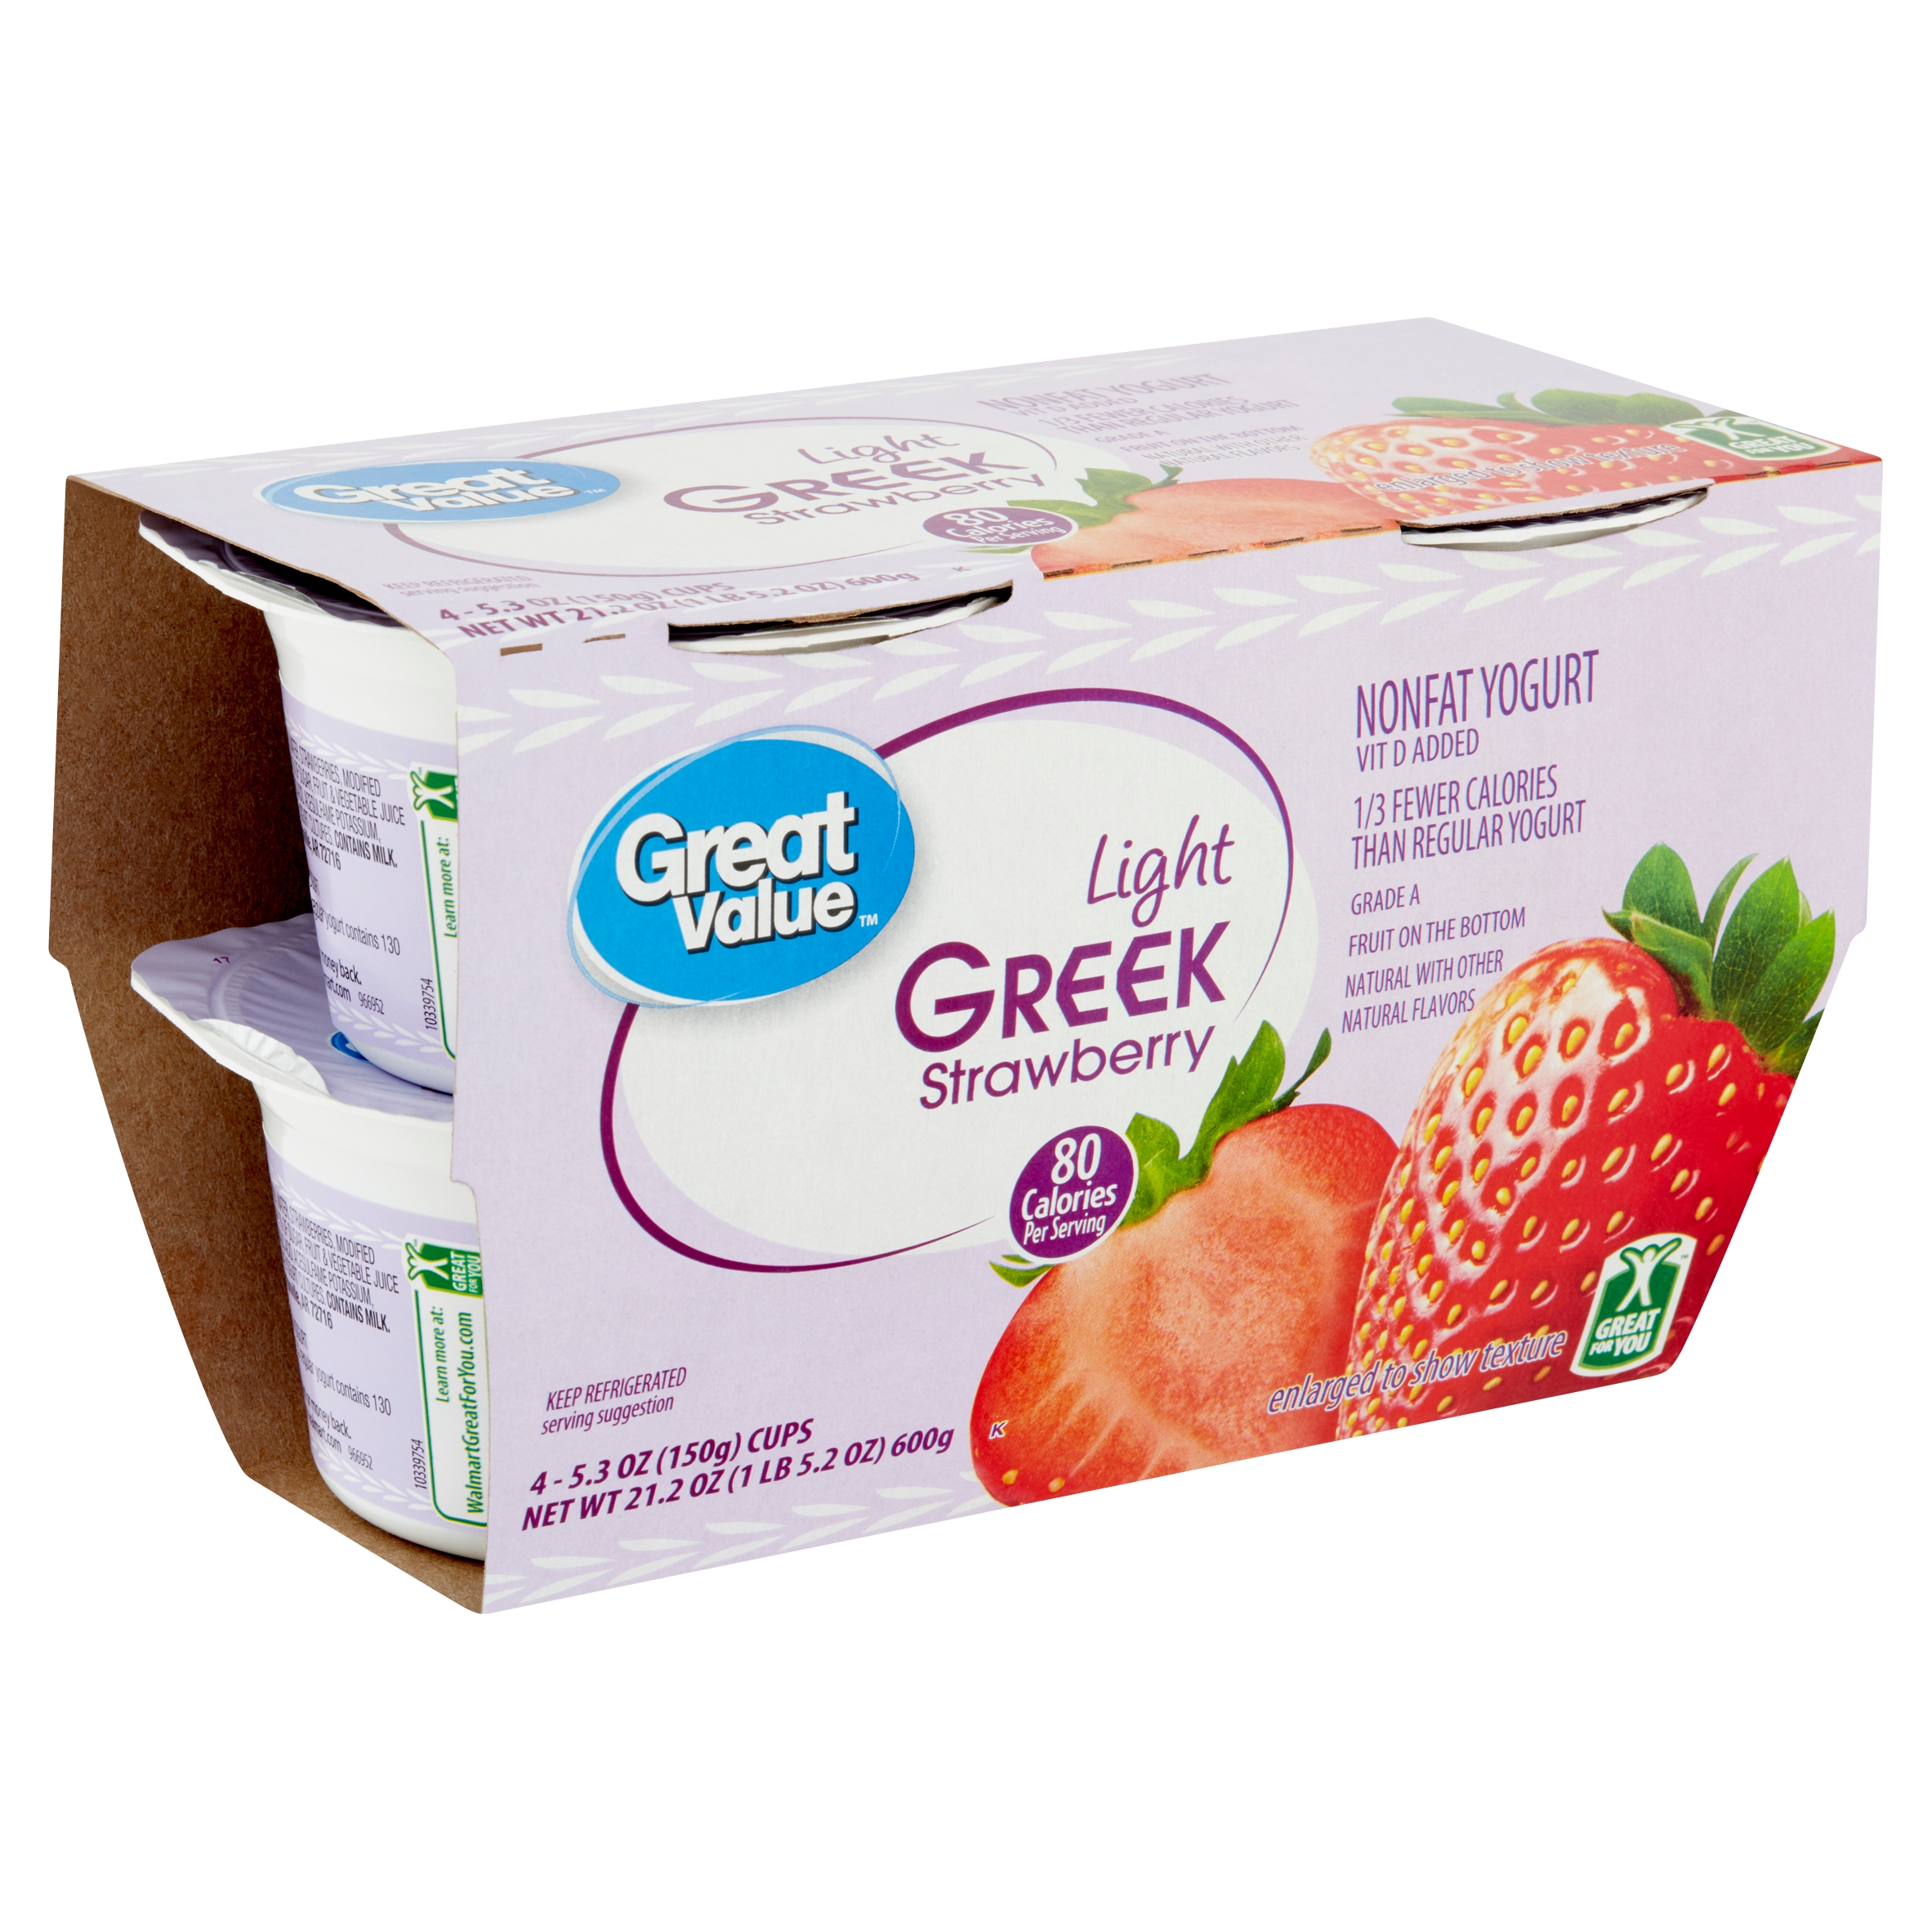 Great Value Light Greek Strawberry Nonfat Yogurt, 5.3 Oz, 4 Count Image